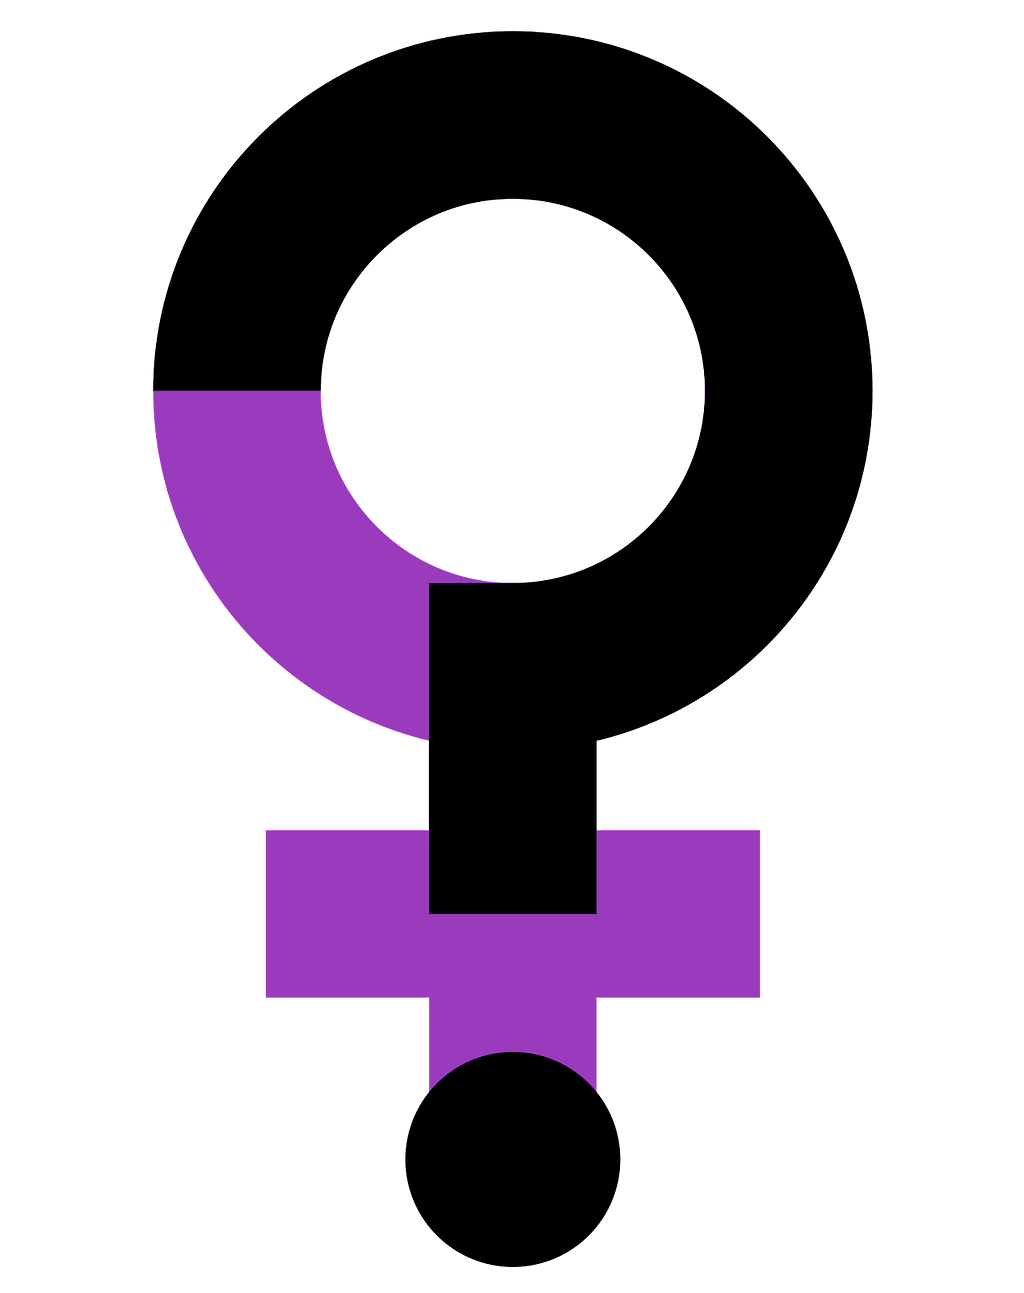 Solving gendered-harassment: A feminist framework for creating safety on Wikipedia